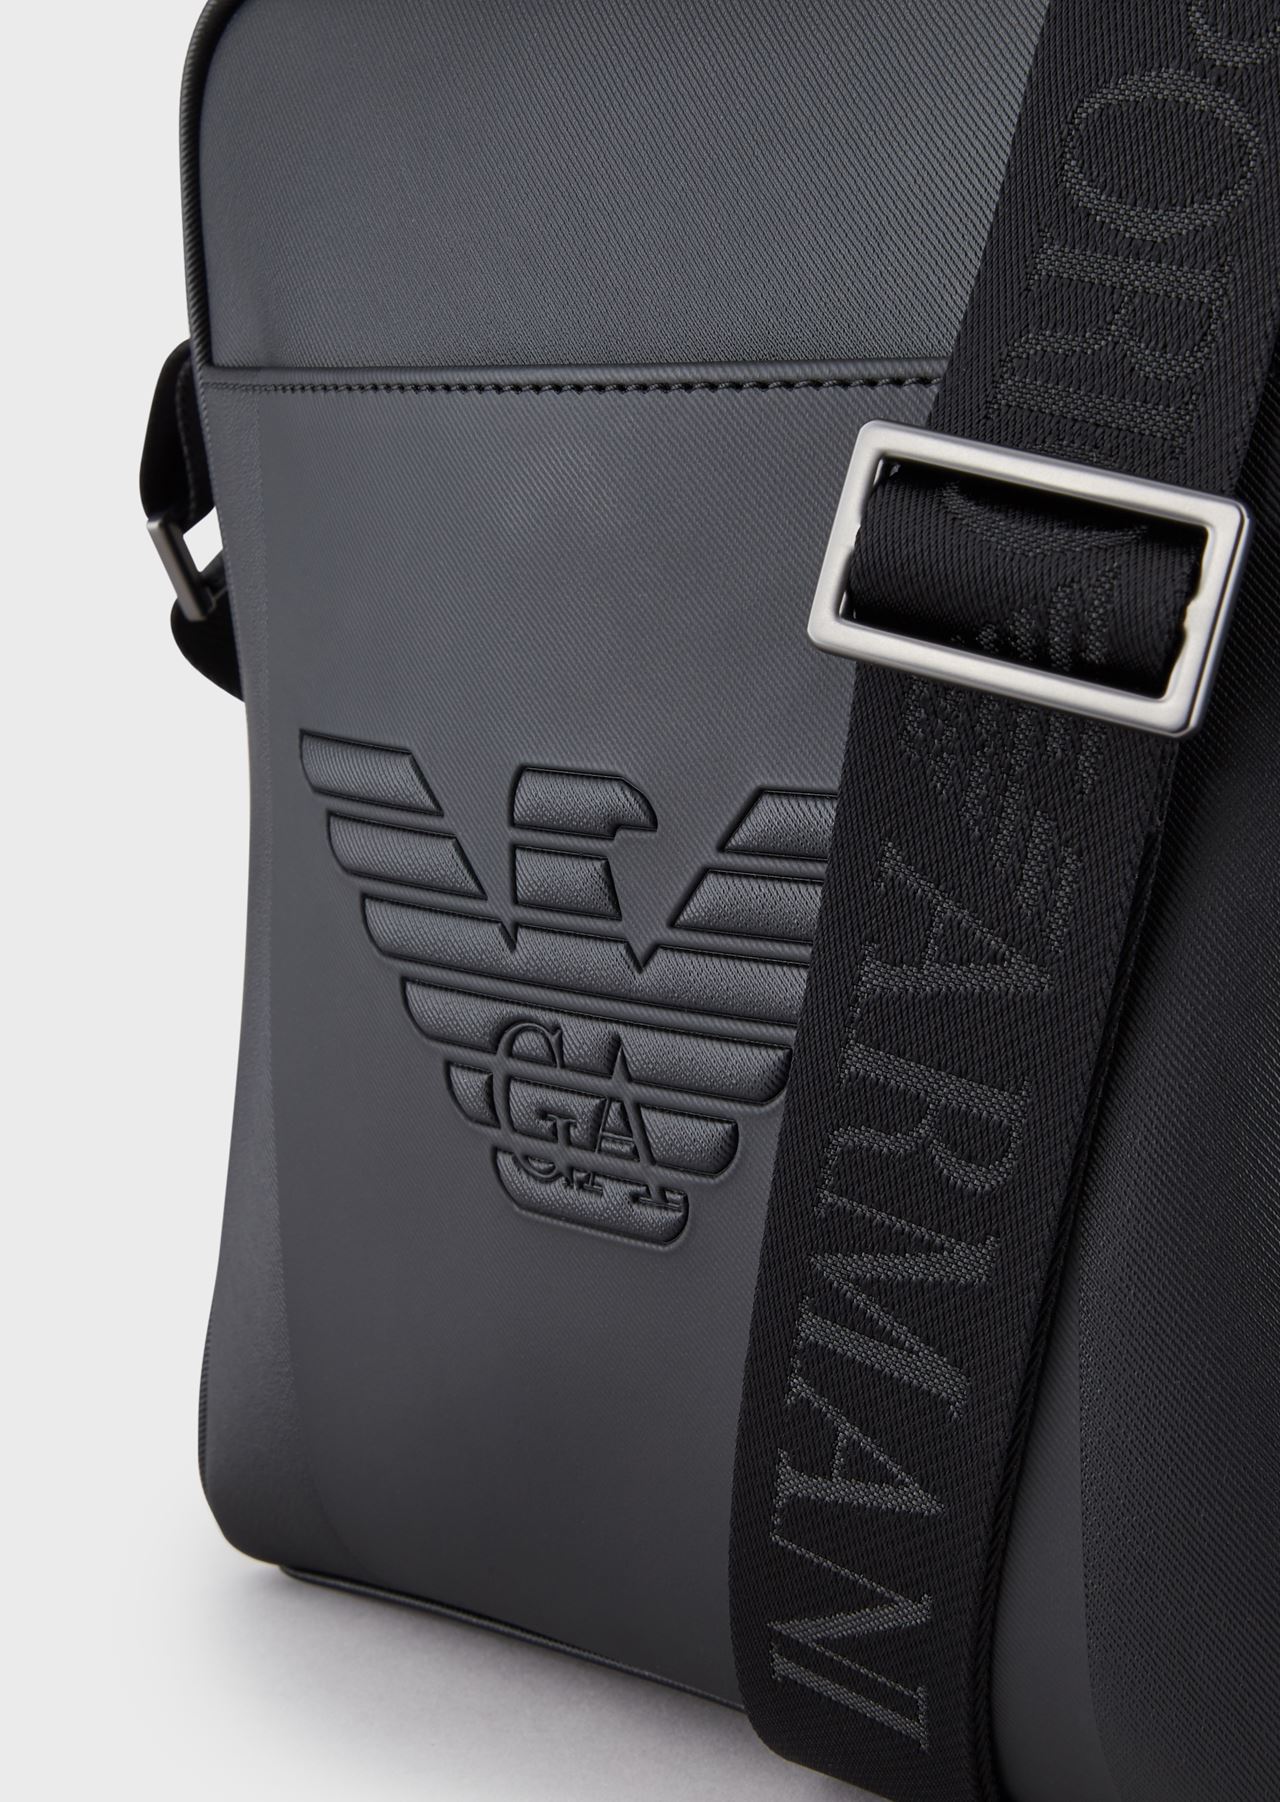 Shoulder bag with eagle maxi logo | Man | Emporio Armani